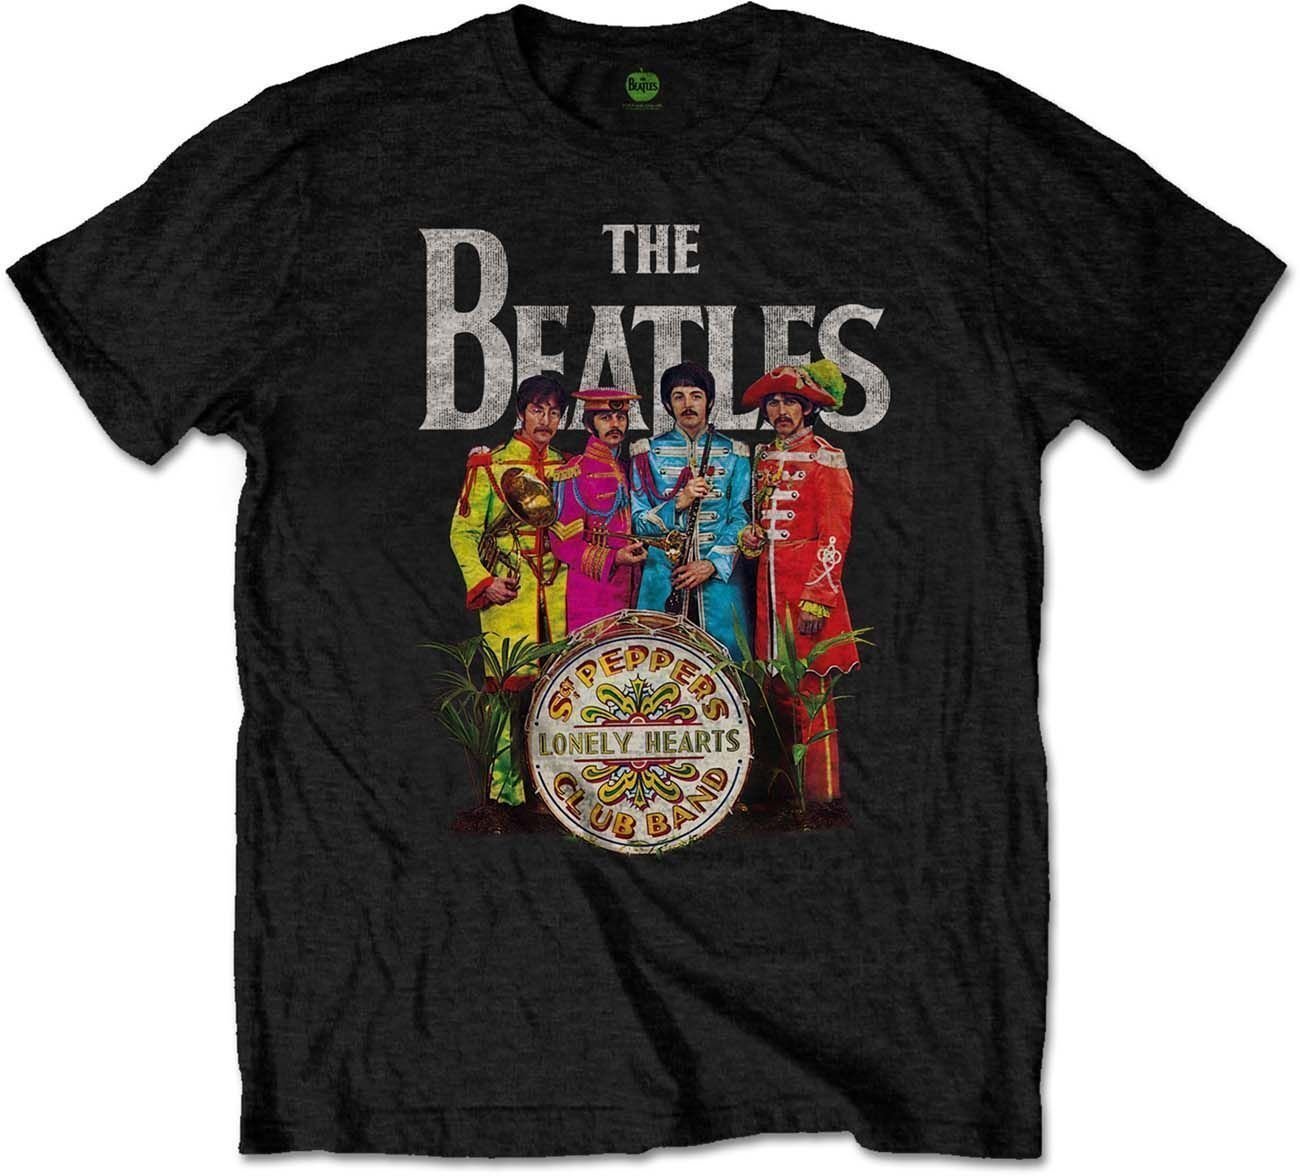 The Beatles T-shirt Unisex Sgt Pepper (Retail Pack) Black 2XL unisex